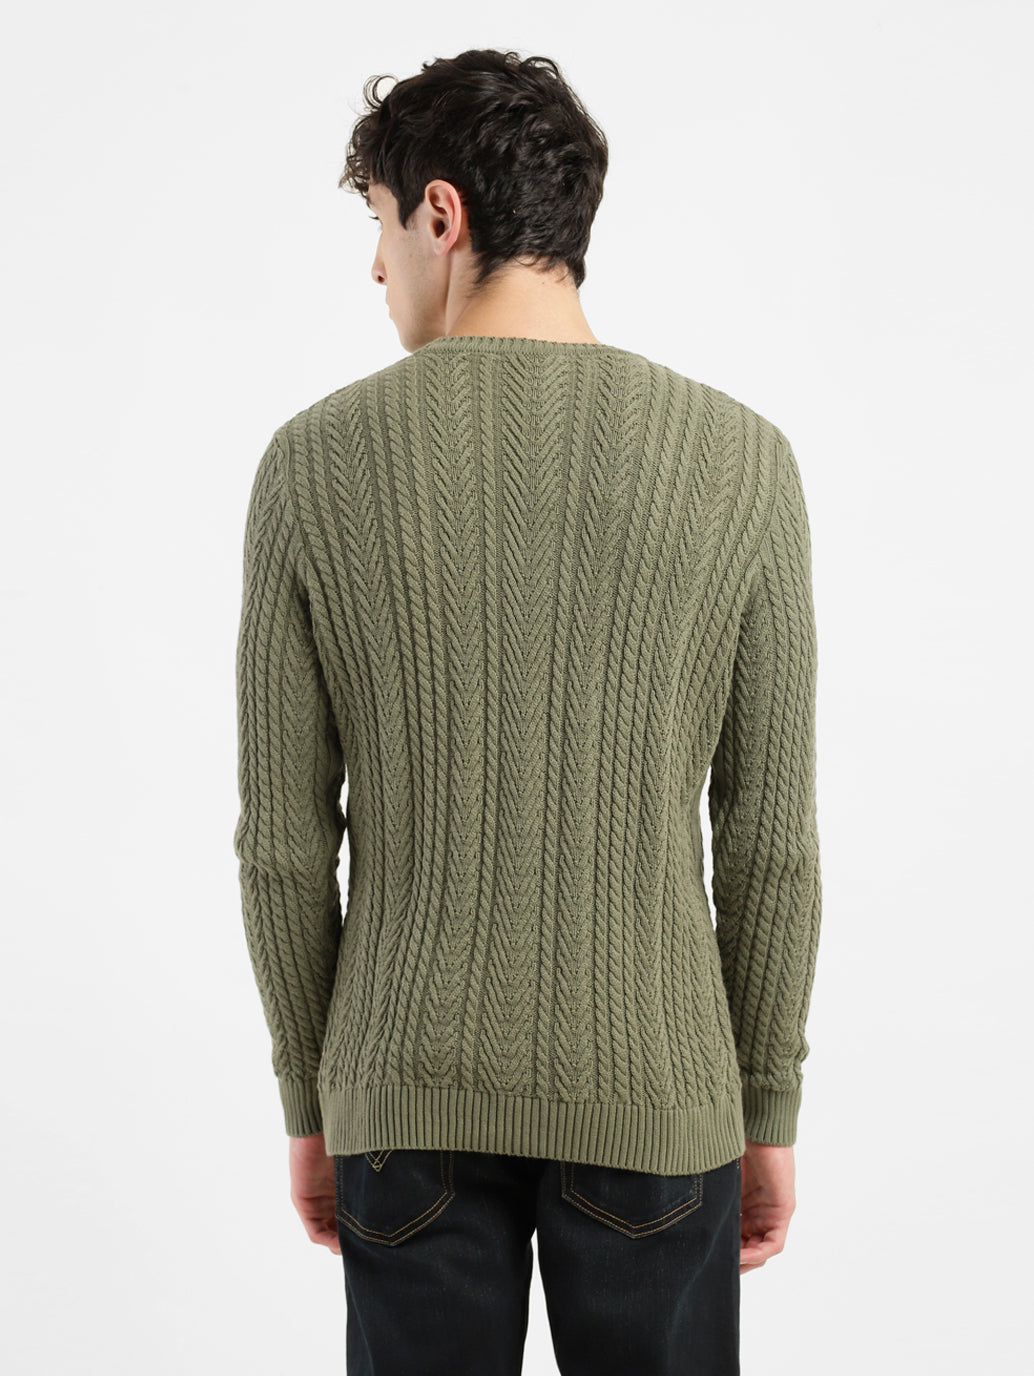 Men's Self Design Olive Crew Neck Sweater